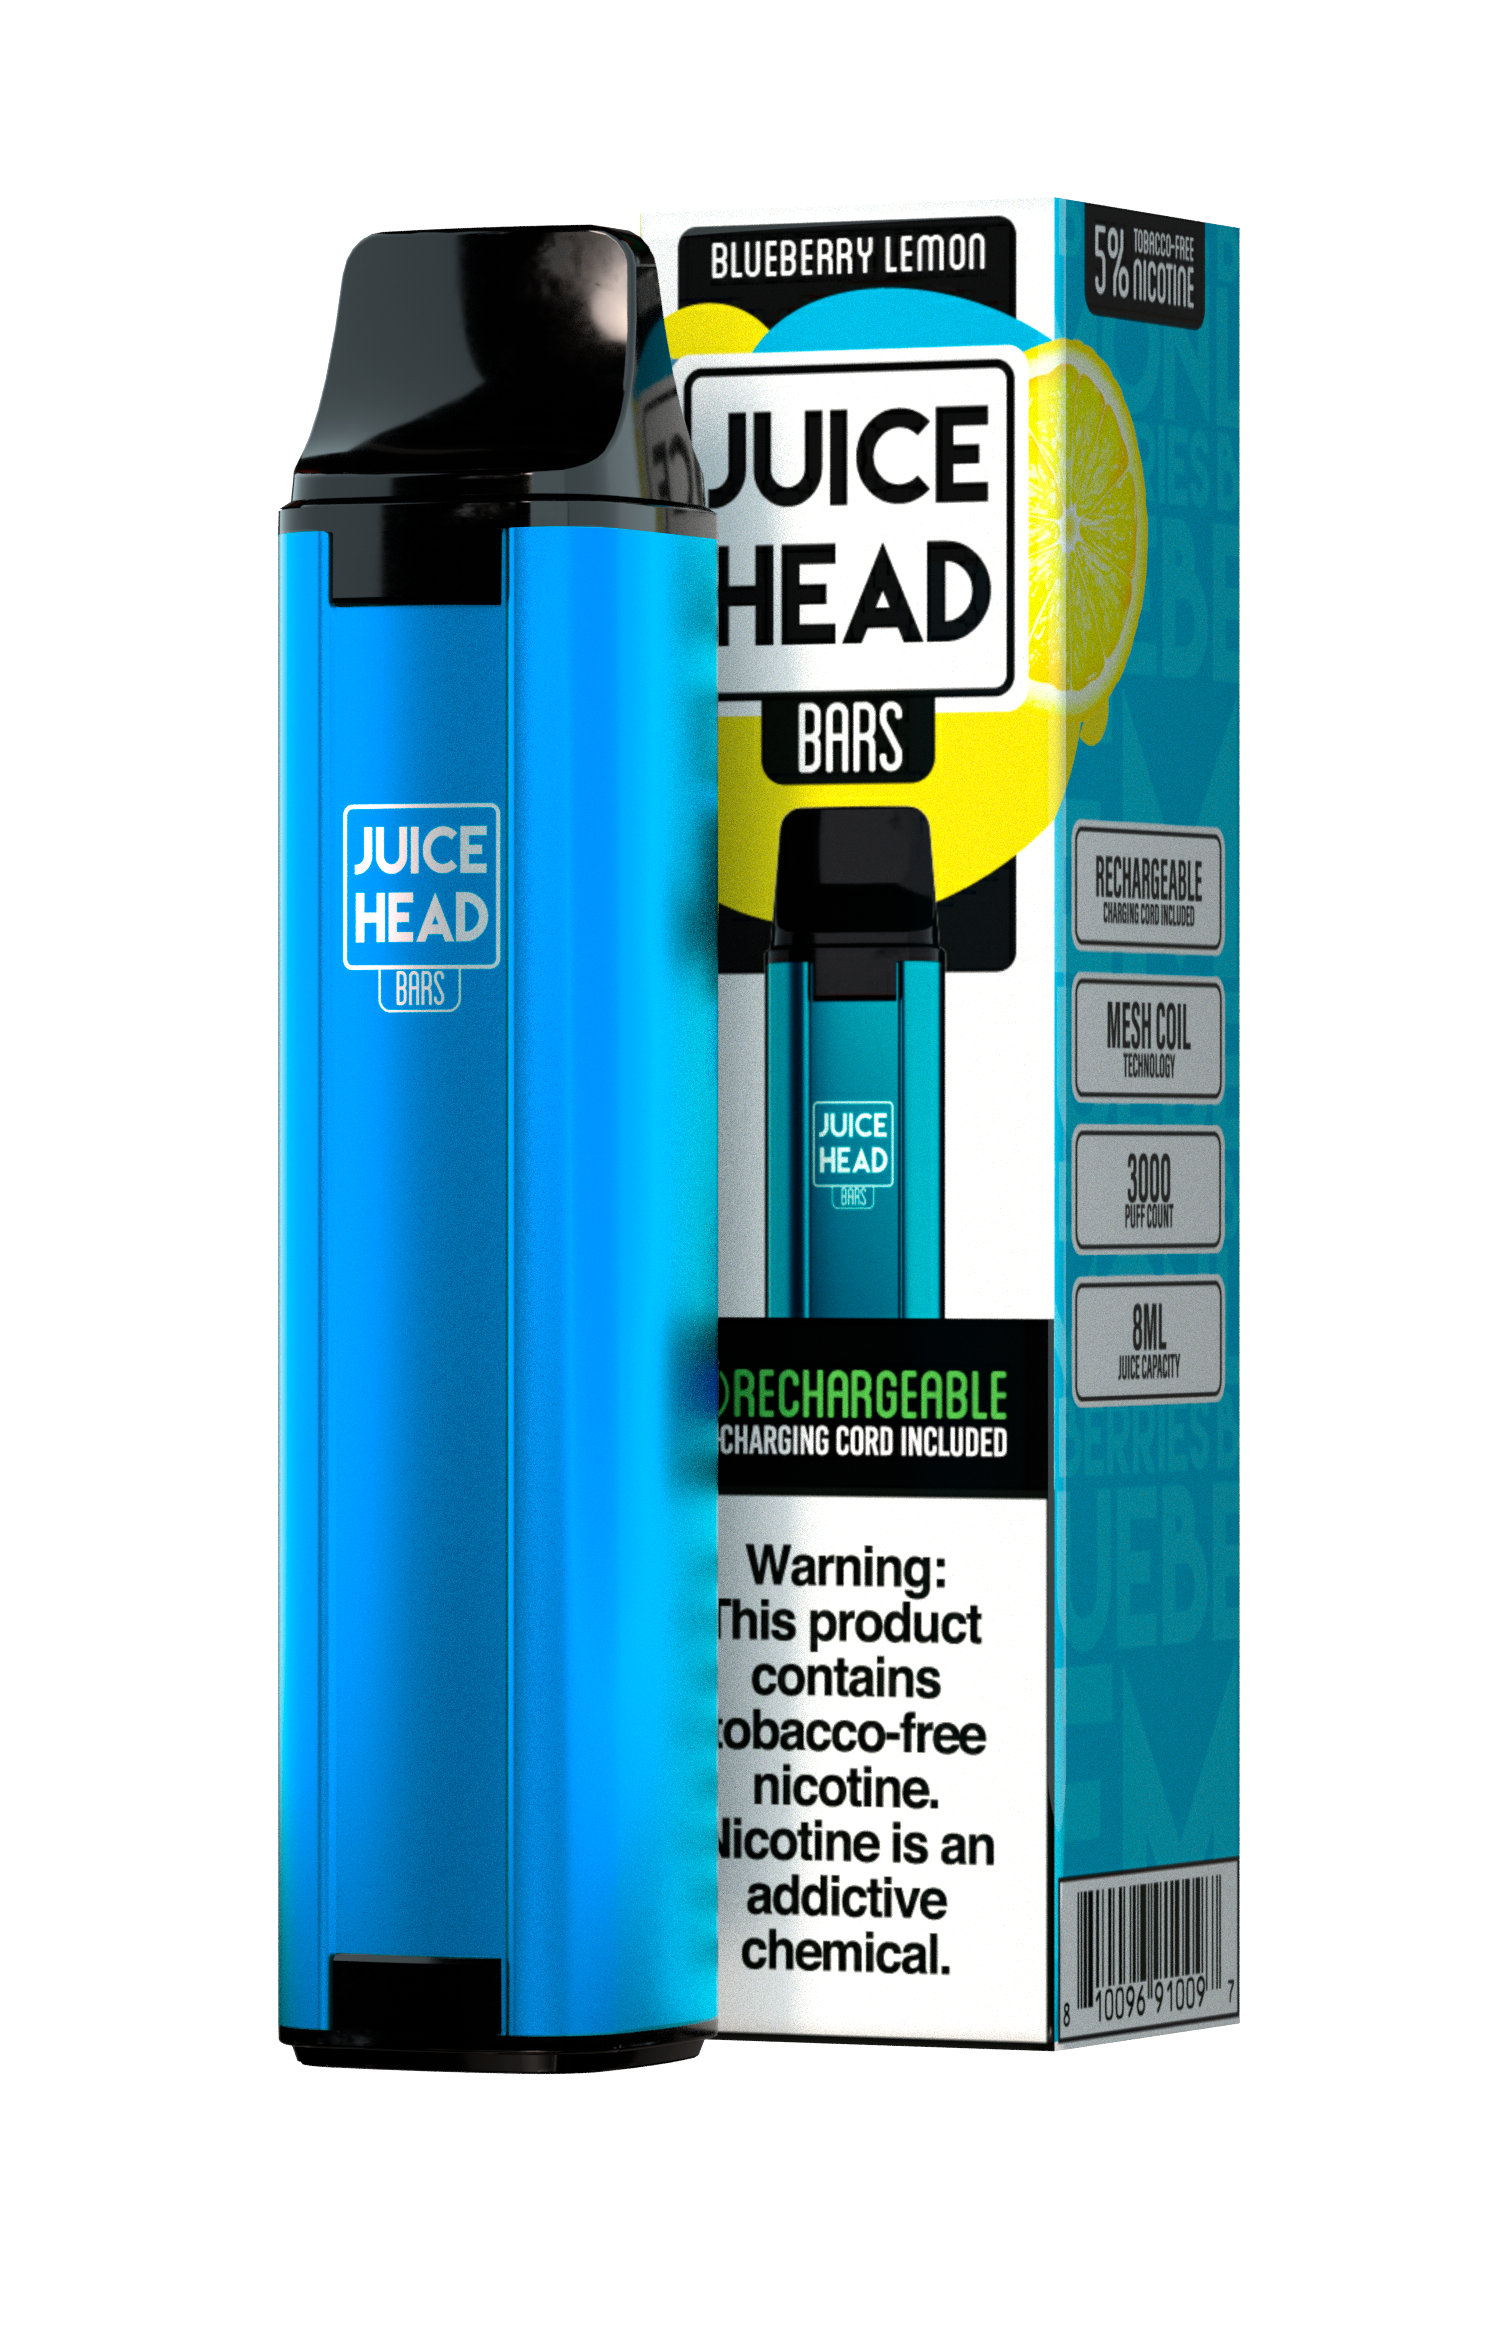 Juice Head 3k Bars (Original and Freeze)